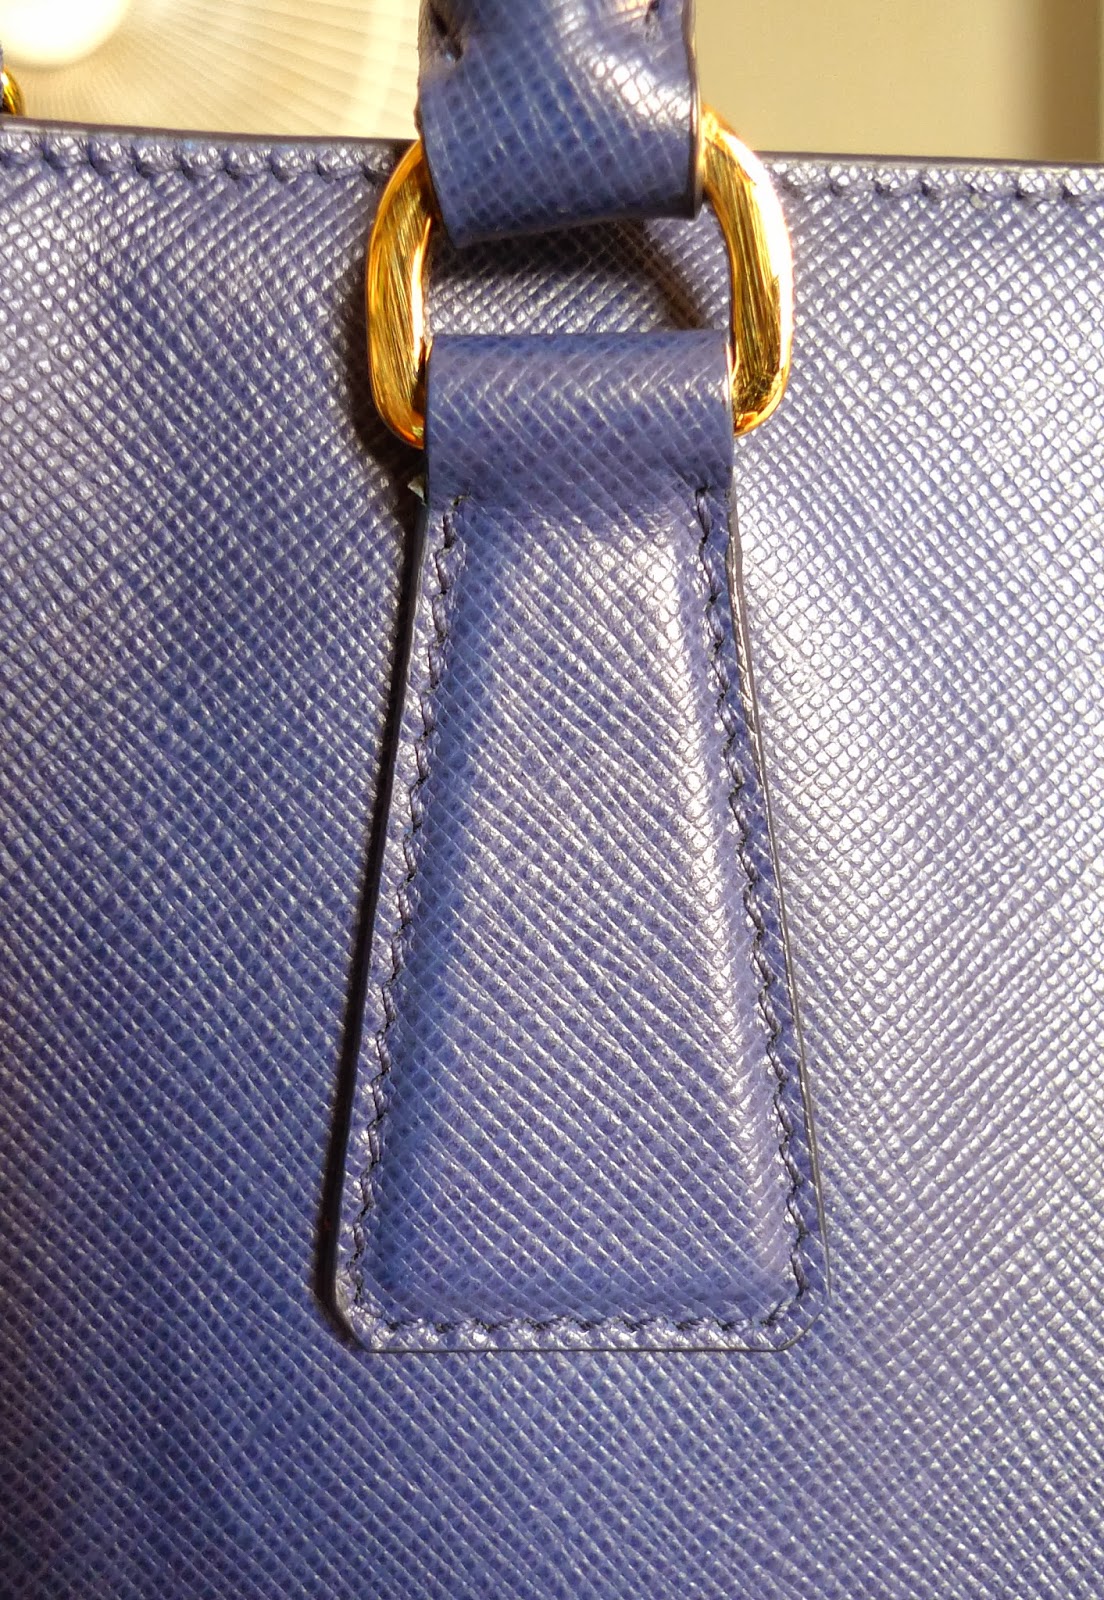 Bluette Large Prada Galleria Saffiano Leather Bag